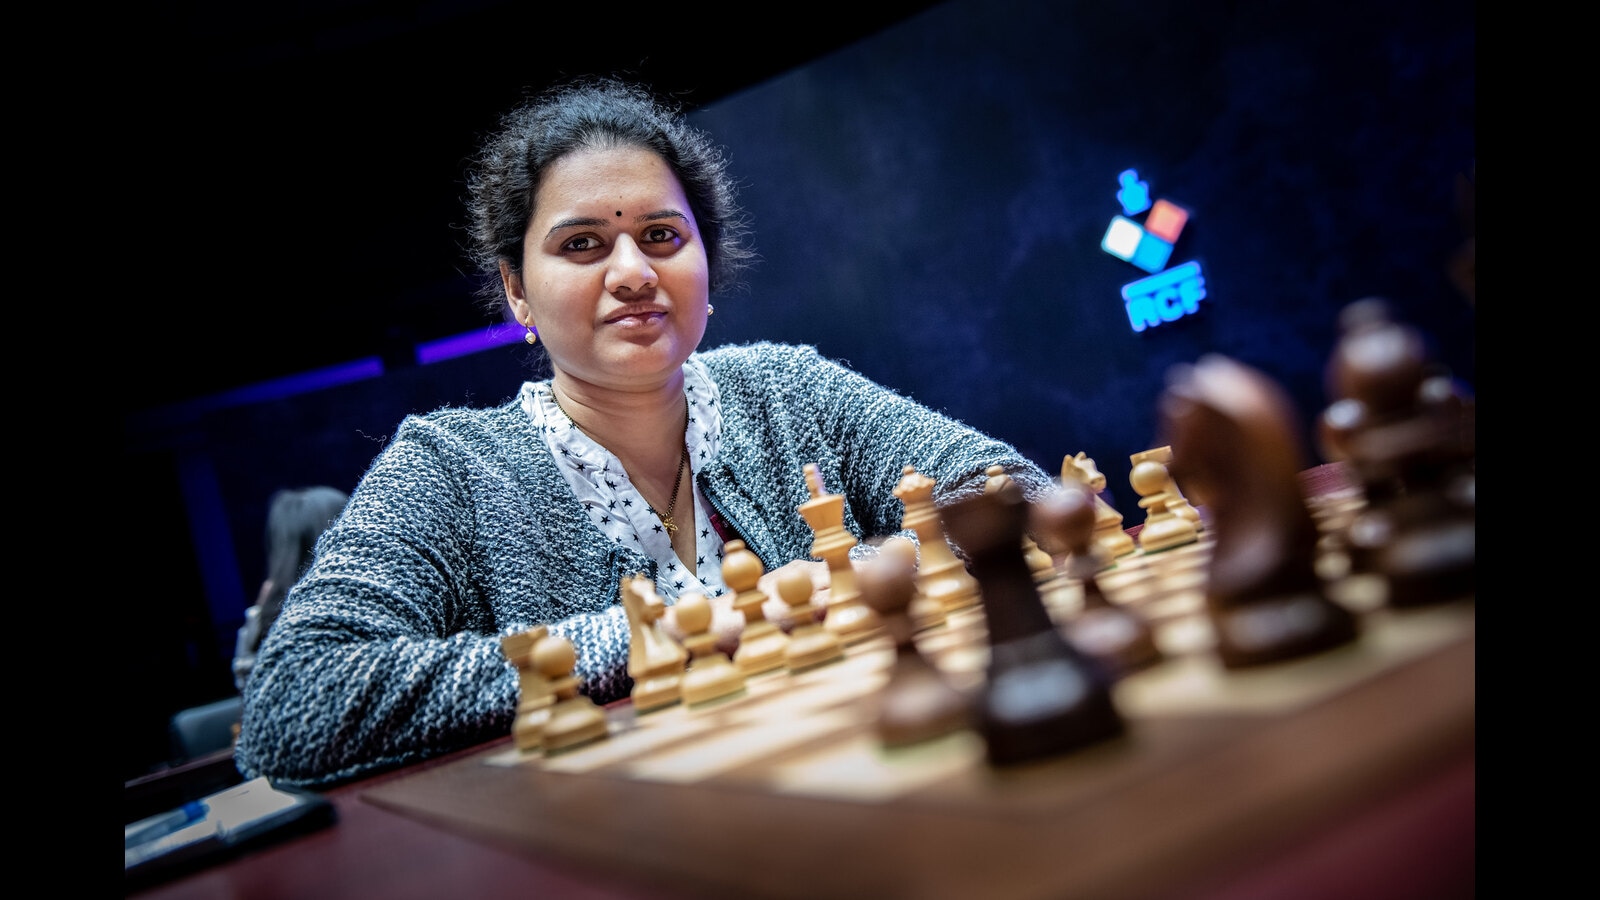 Chess: India's Koneru Humpy Jumps To World No. 3 In Latest FIDE Rankings